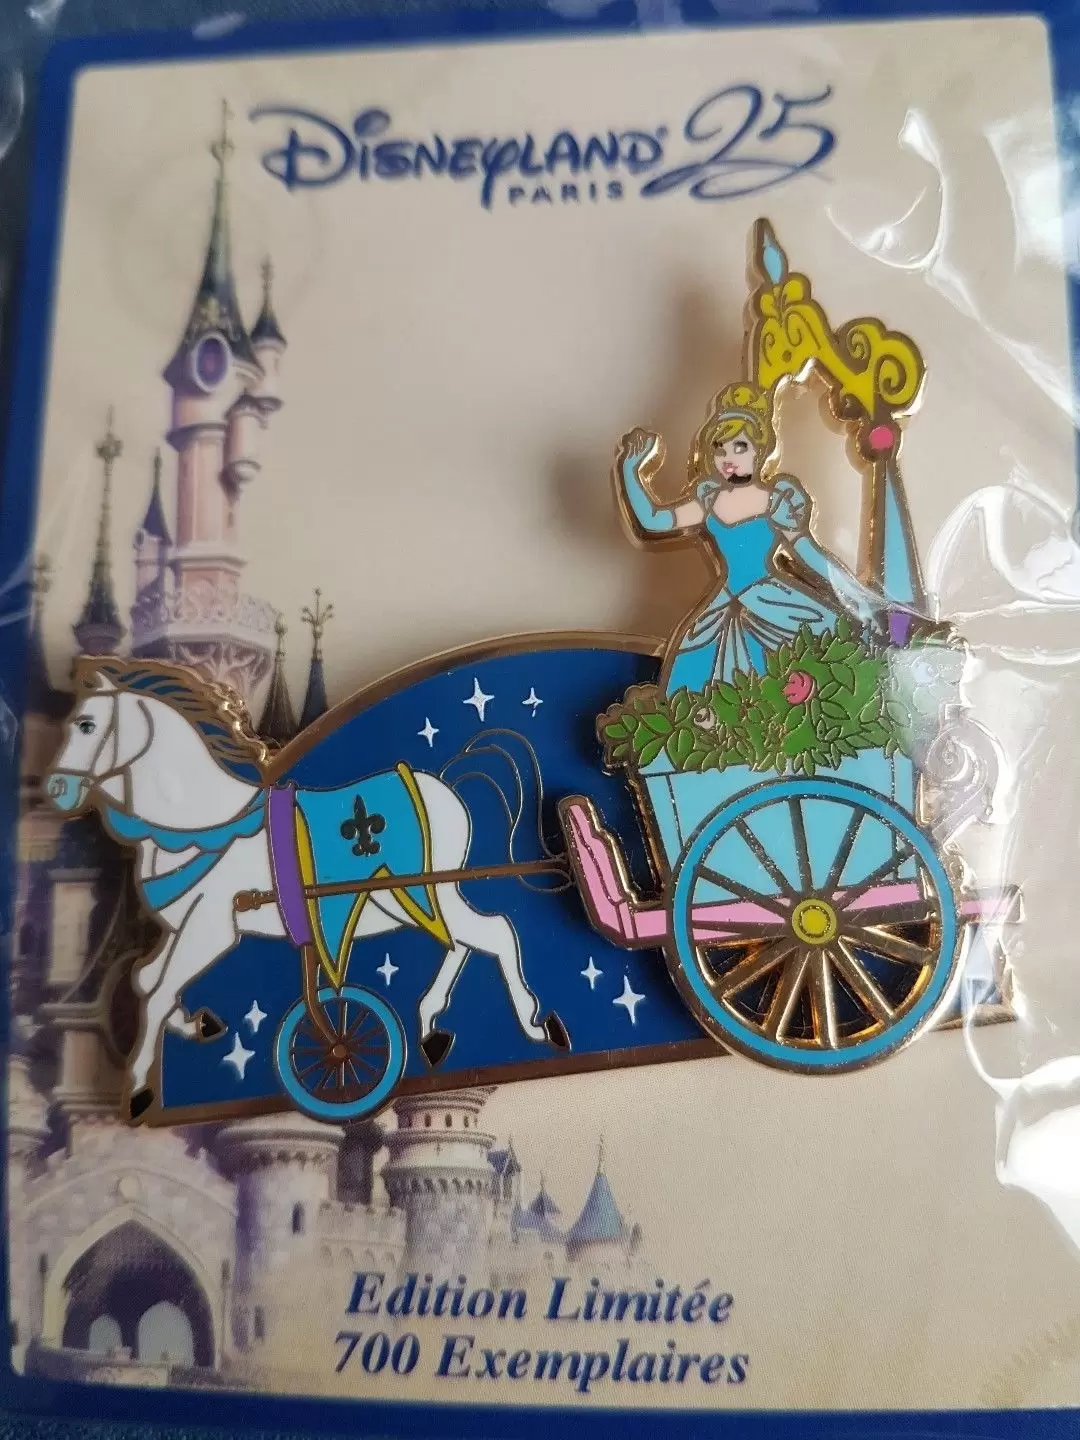 Parade 25 Years - Parade Cinderella 25 Years